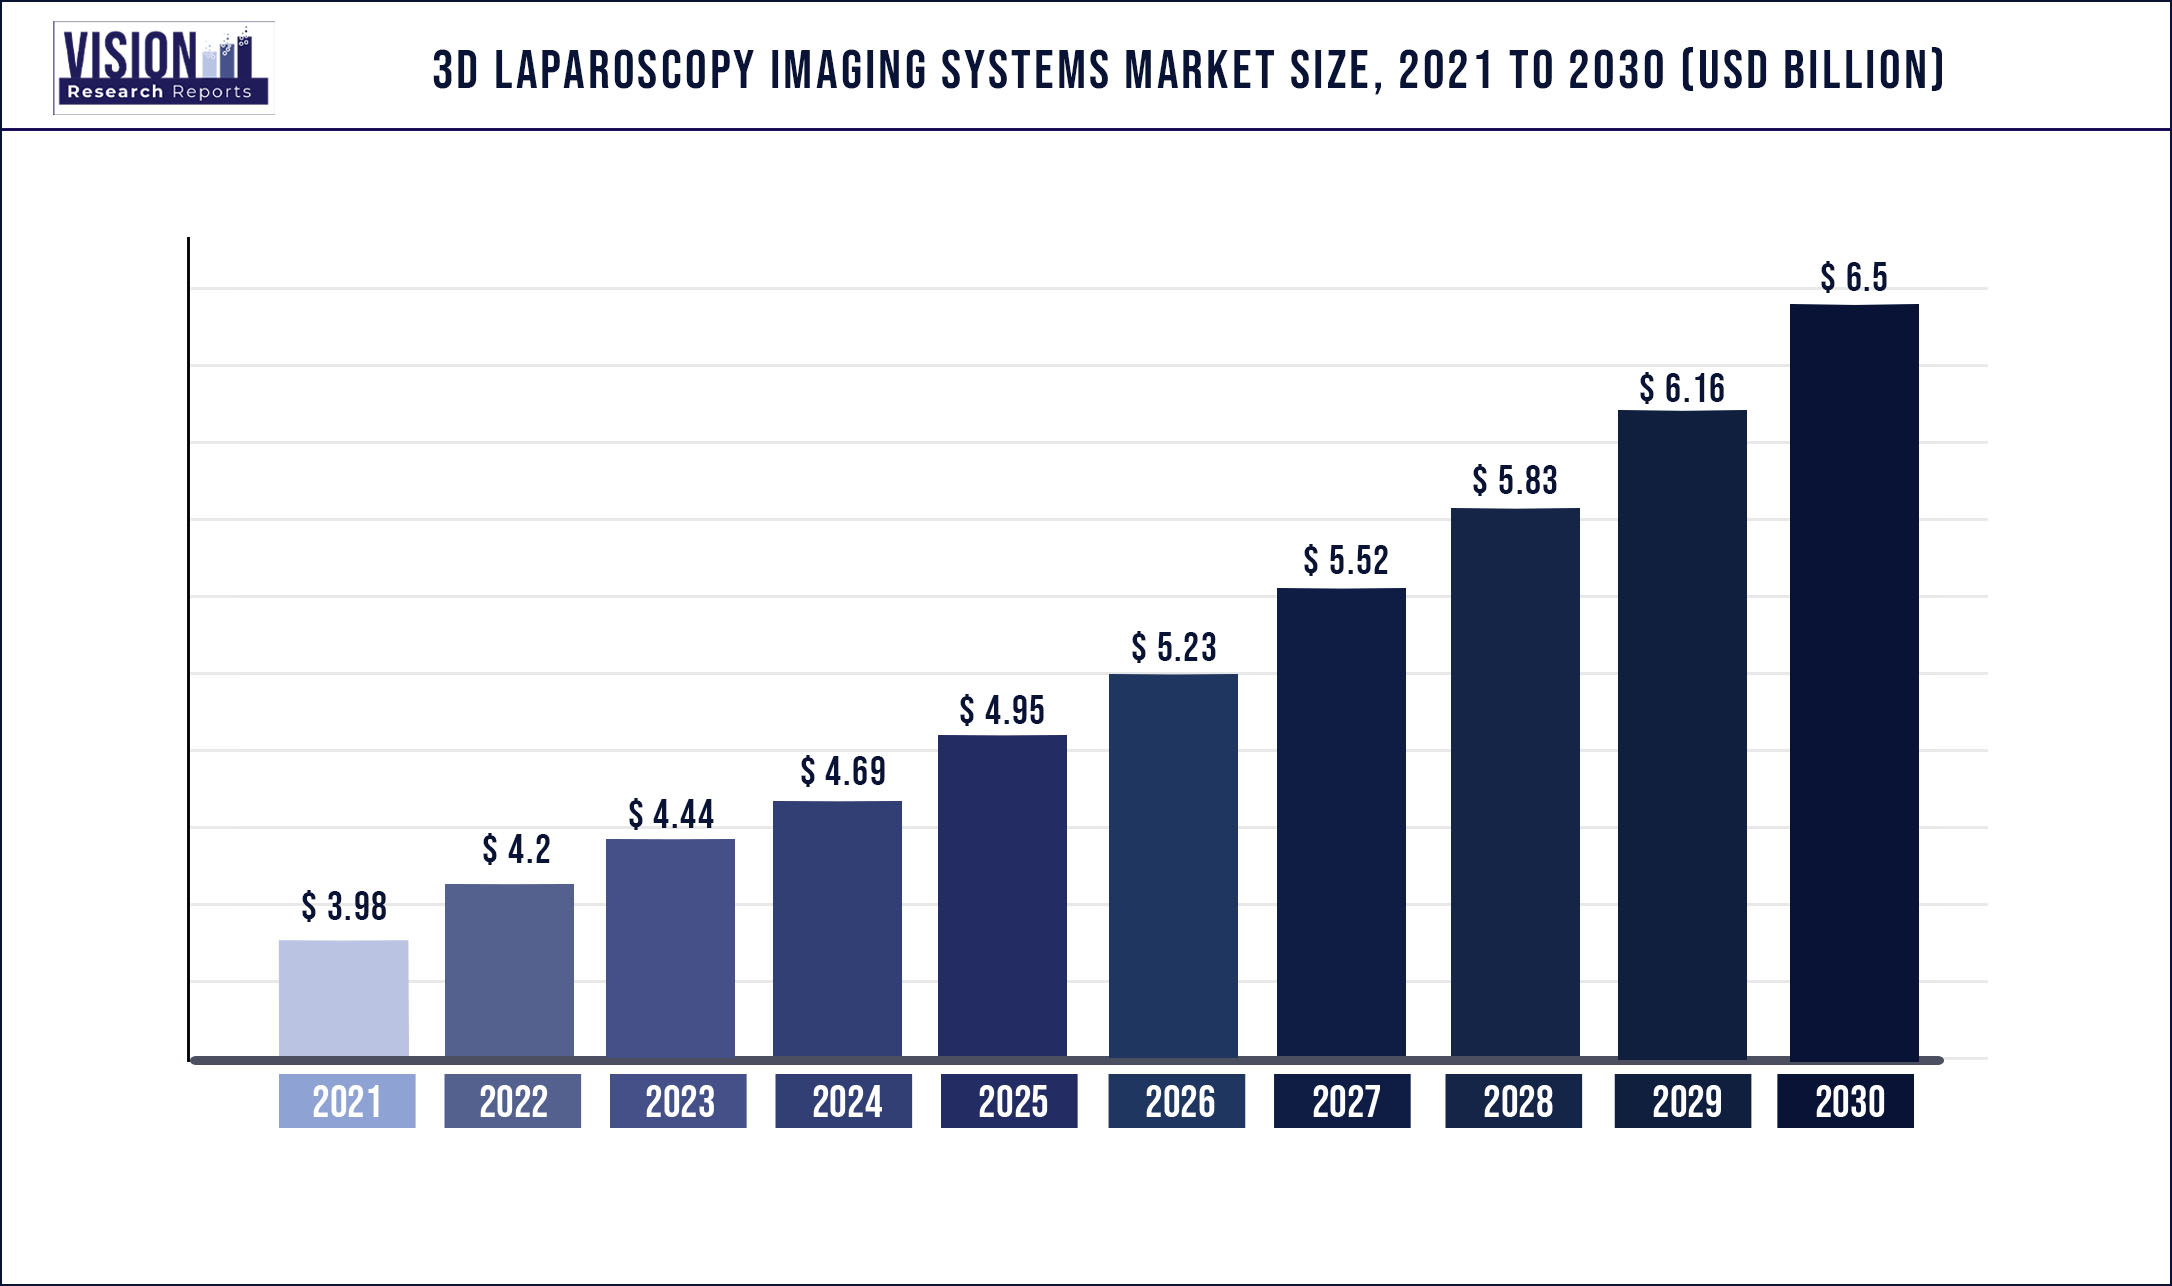 3D Laparoscopy Imaging Systems Market Size 2021 to 2030